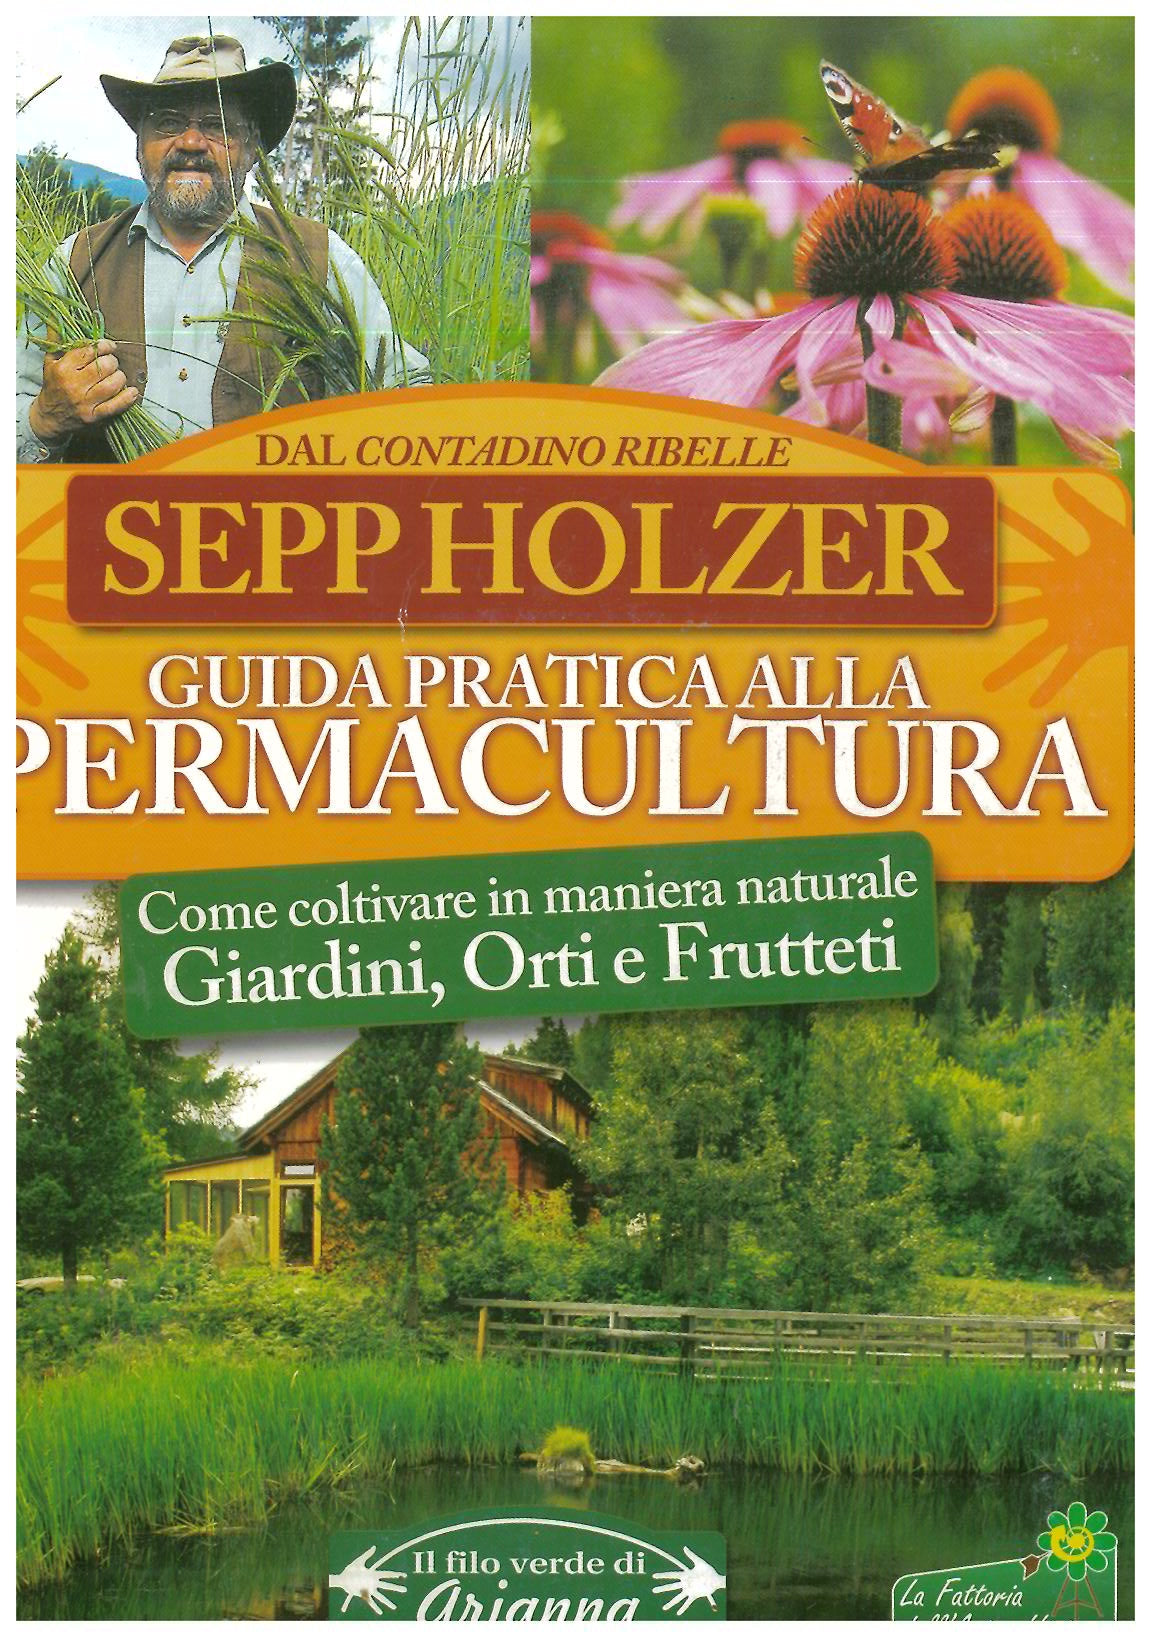 Guida pratica alla permacultura - Holzer S. 